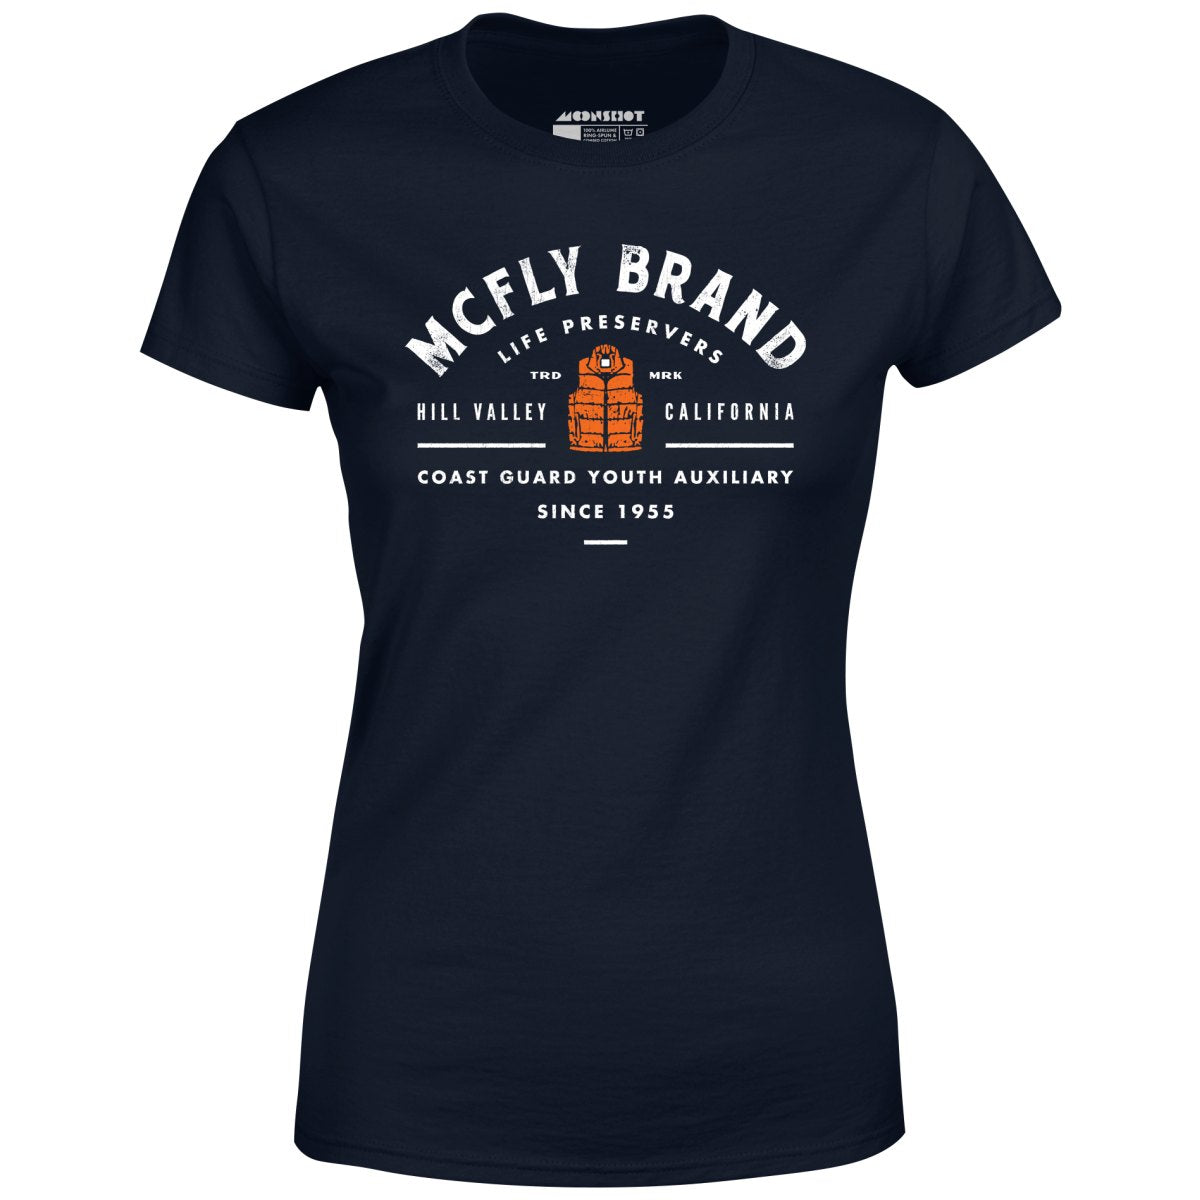 McFly Brand Life Preservers - Women's T-Shirt